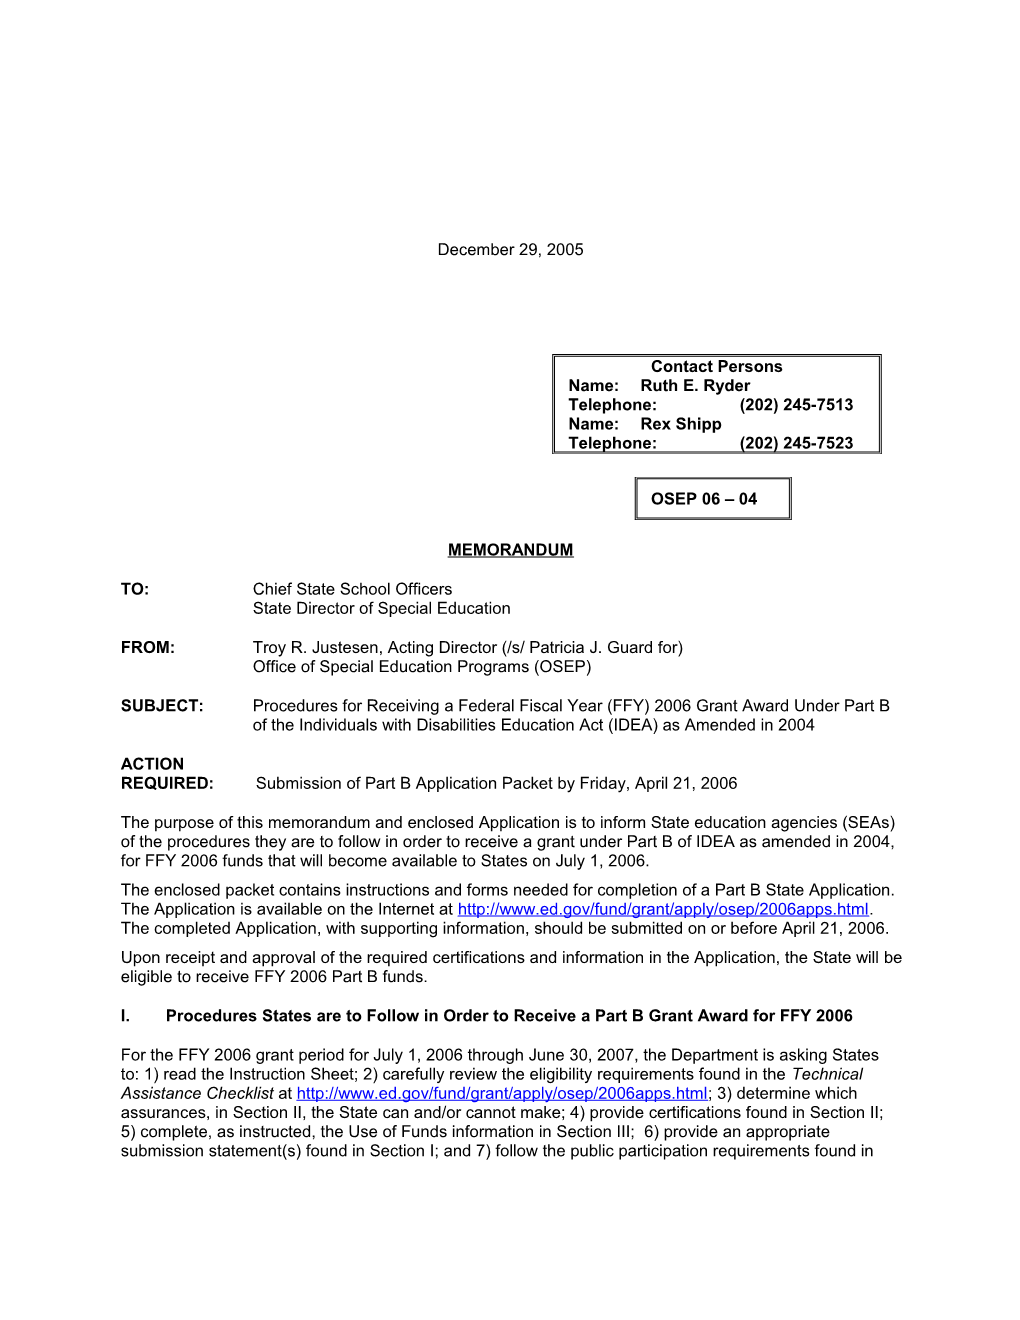 Memorandum to State Director of Special Education; Procedures for Receiving 2006 Part B